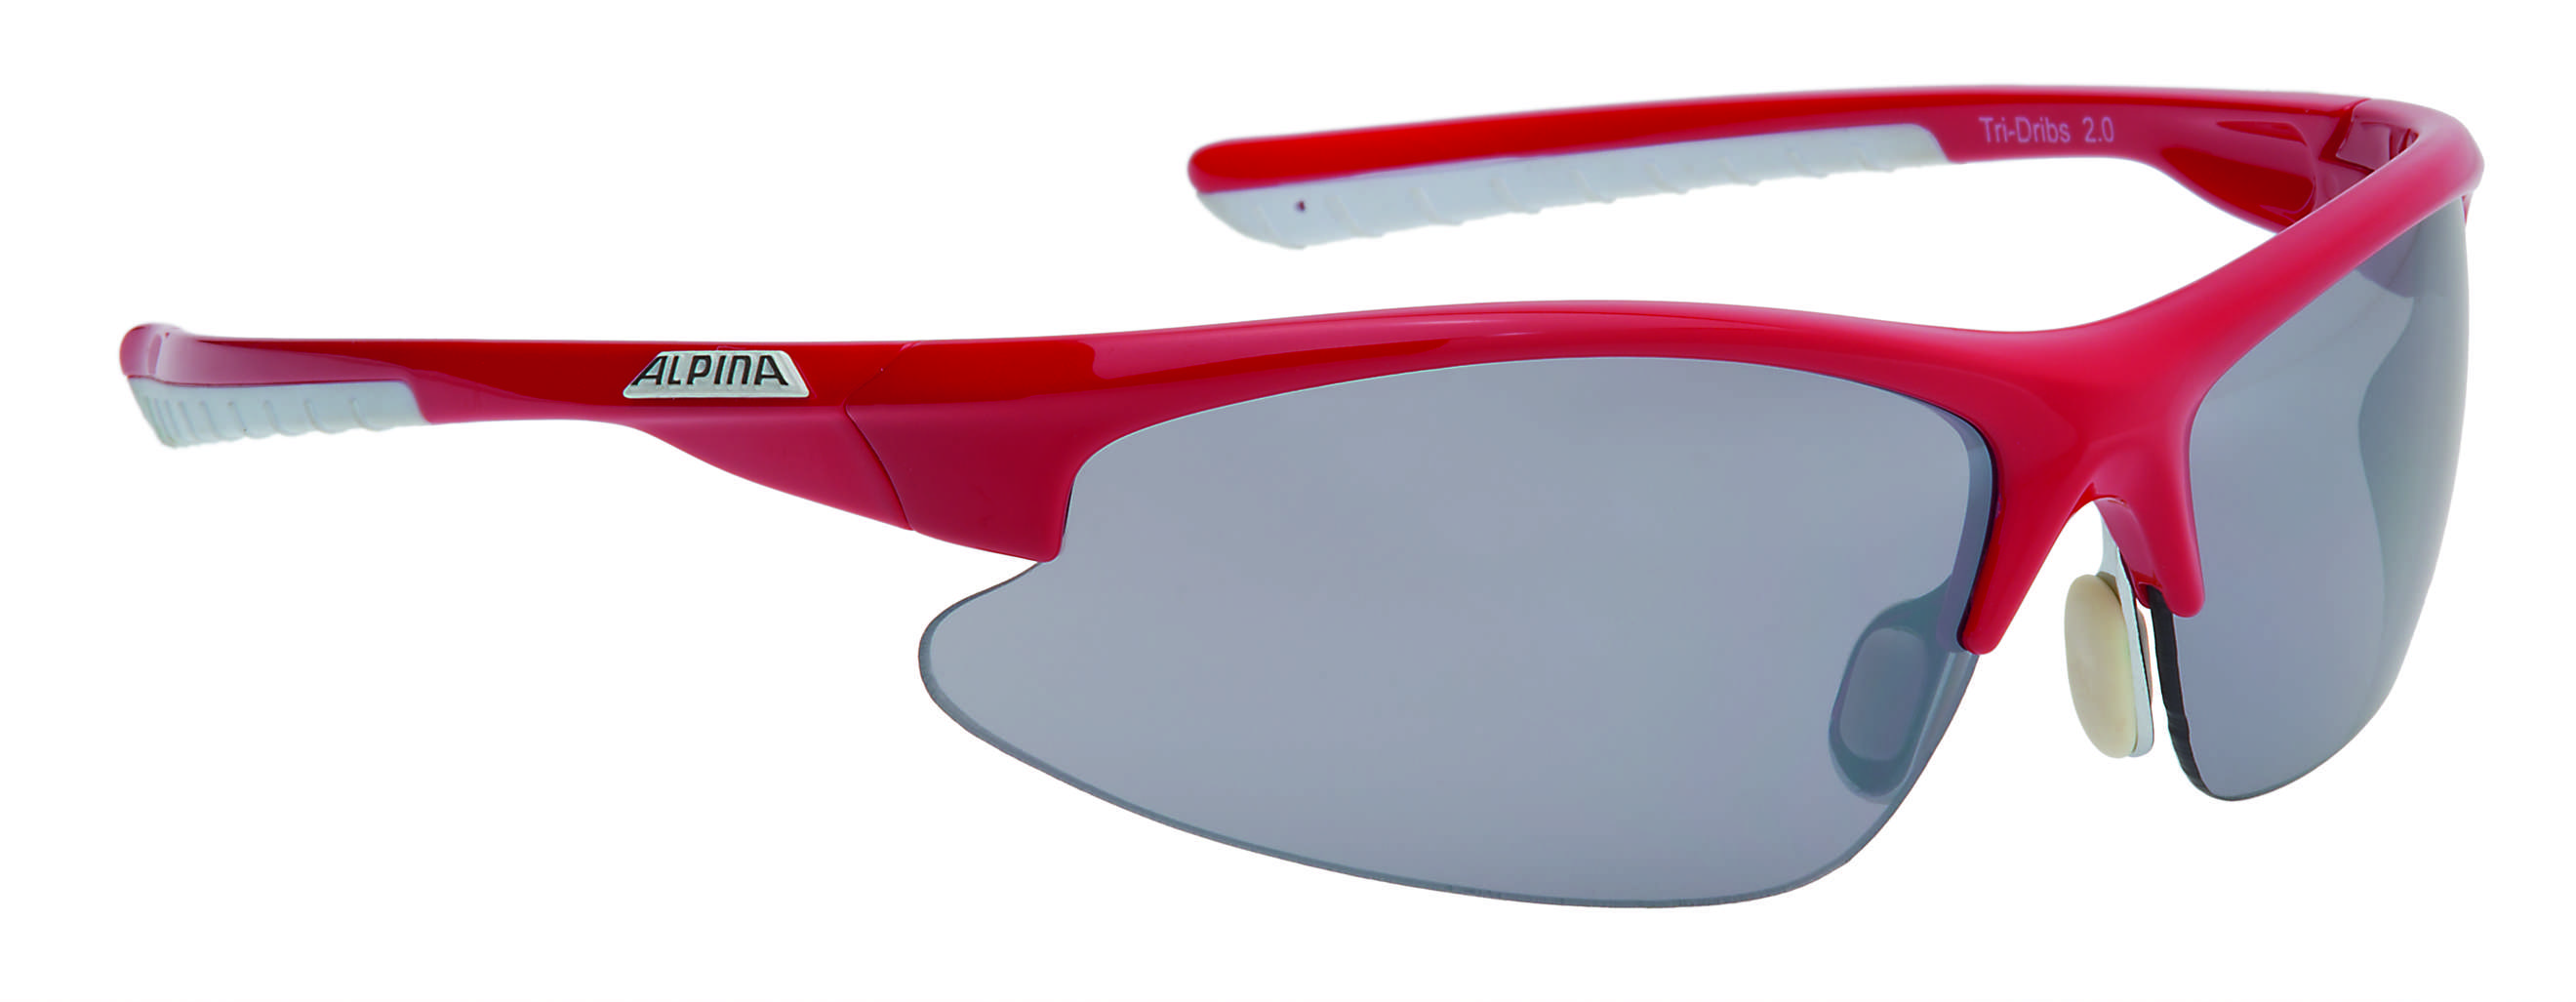 Очки Солнцезащитные Alpina Performance Tri-Dribs 2.0 Red-White